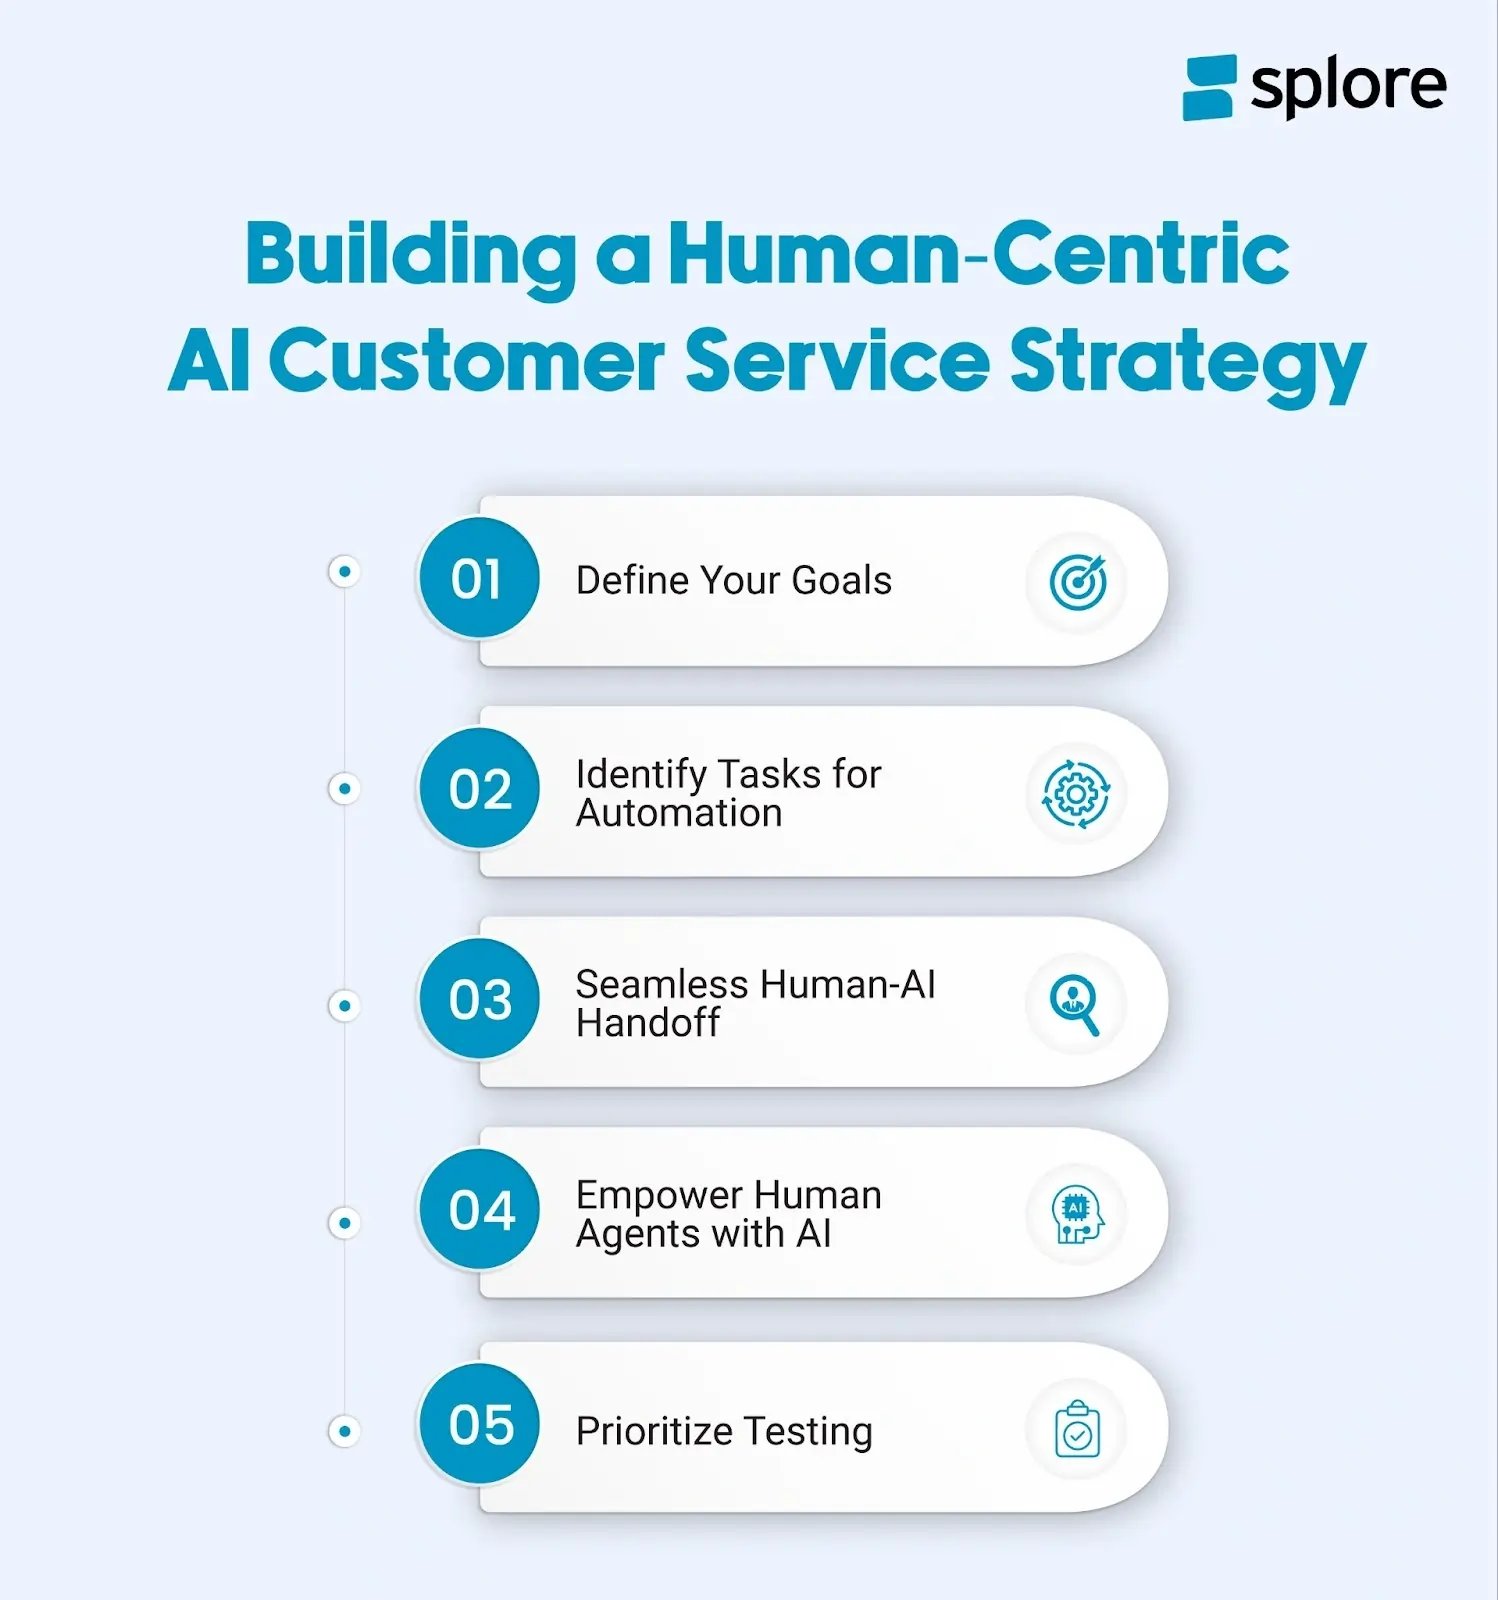 Building a Human Centric AI Customer Service Strategy